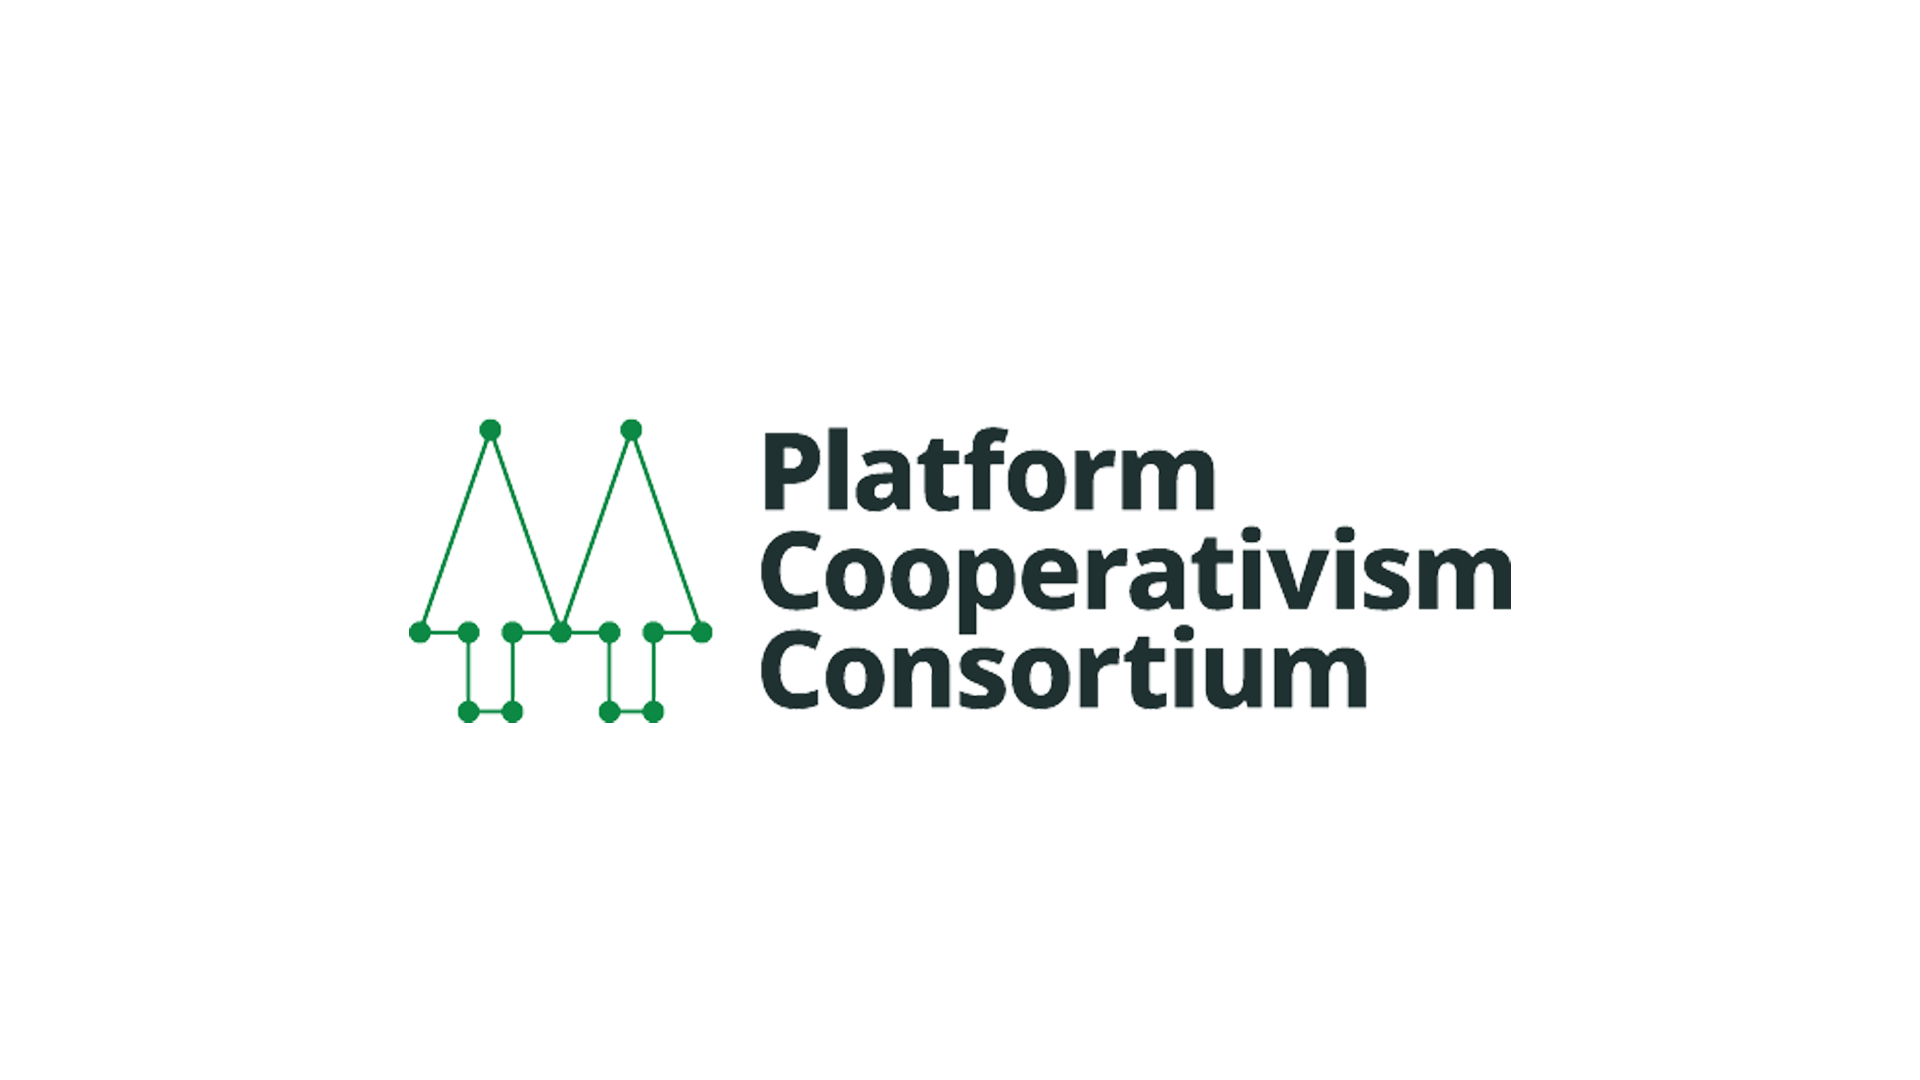 Platform Cooperative Working Group